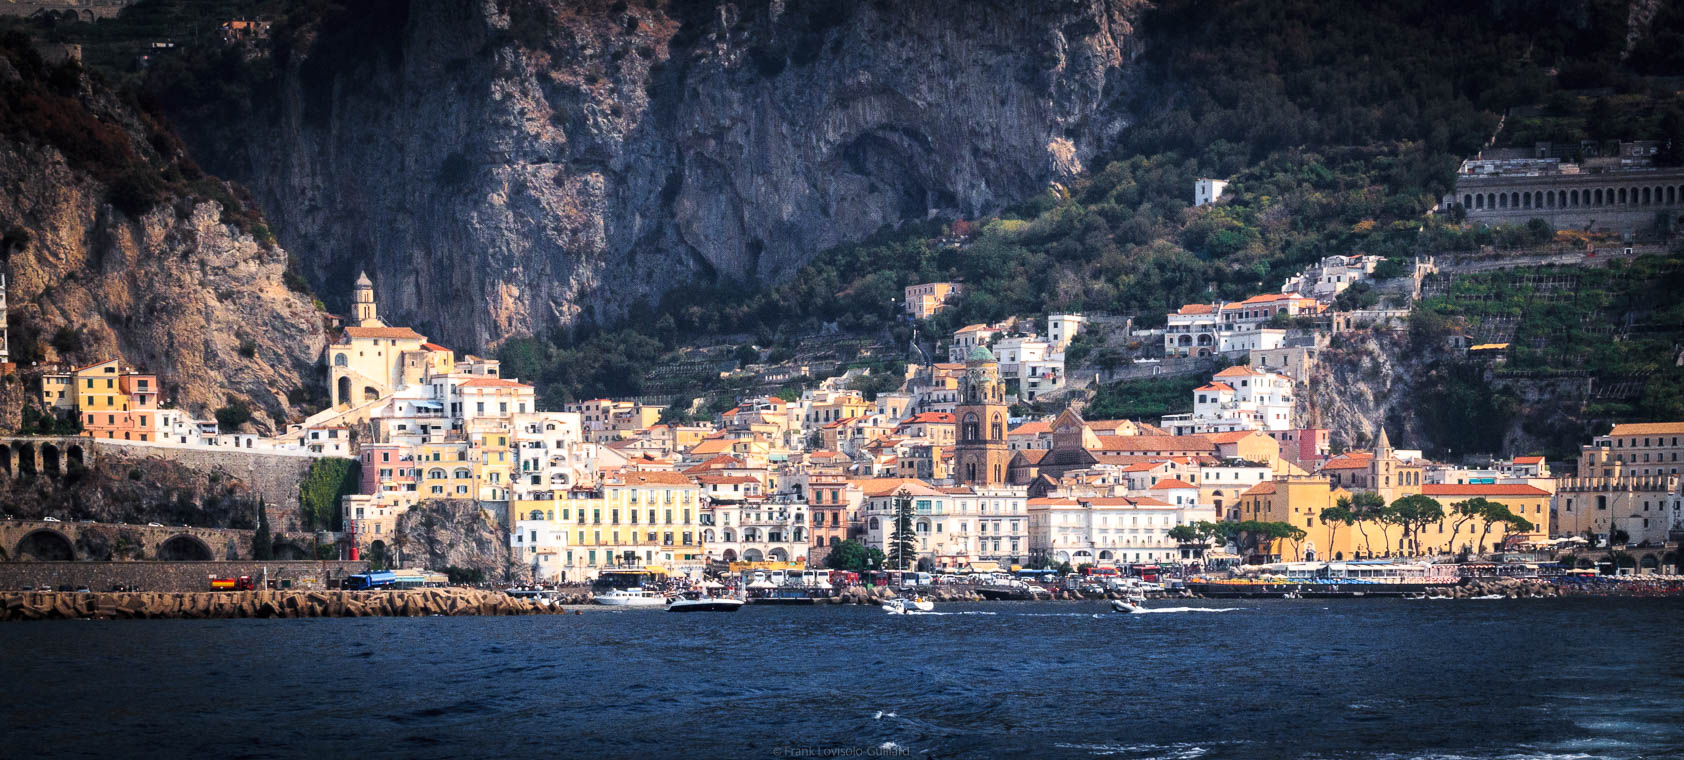 Costiera amalfitana - Amalfi